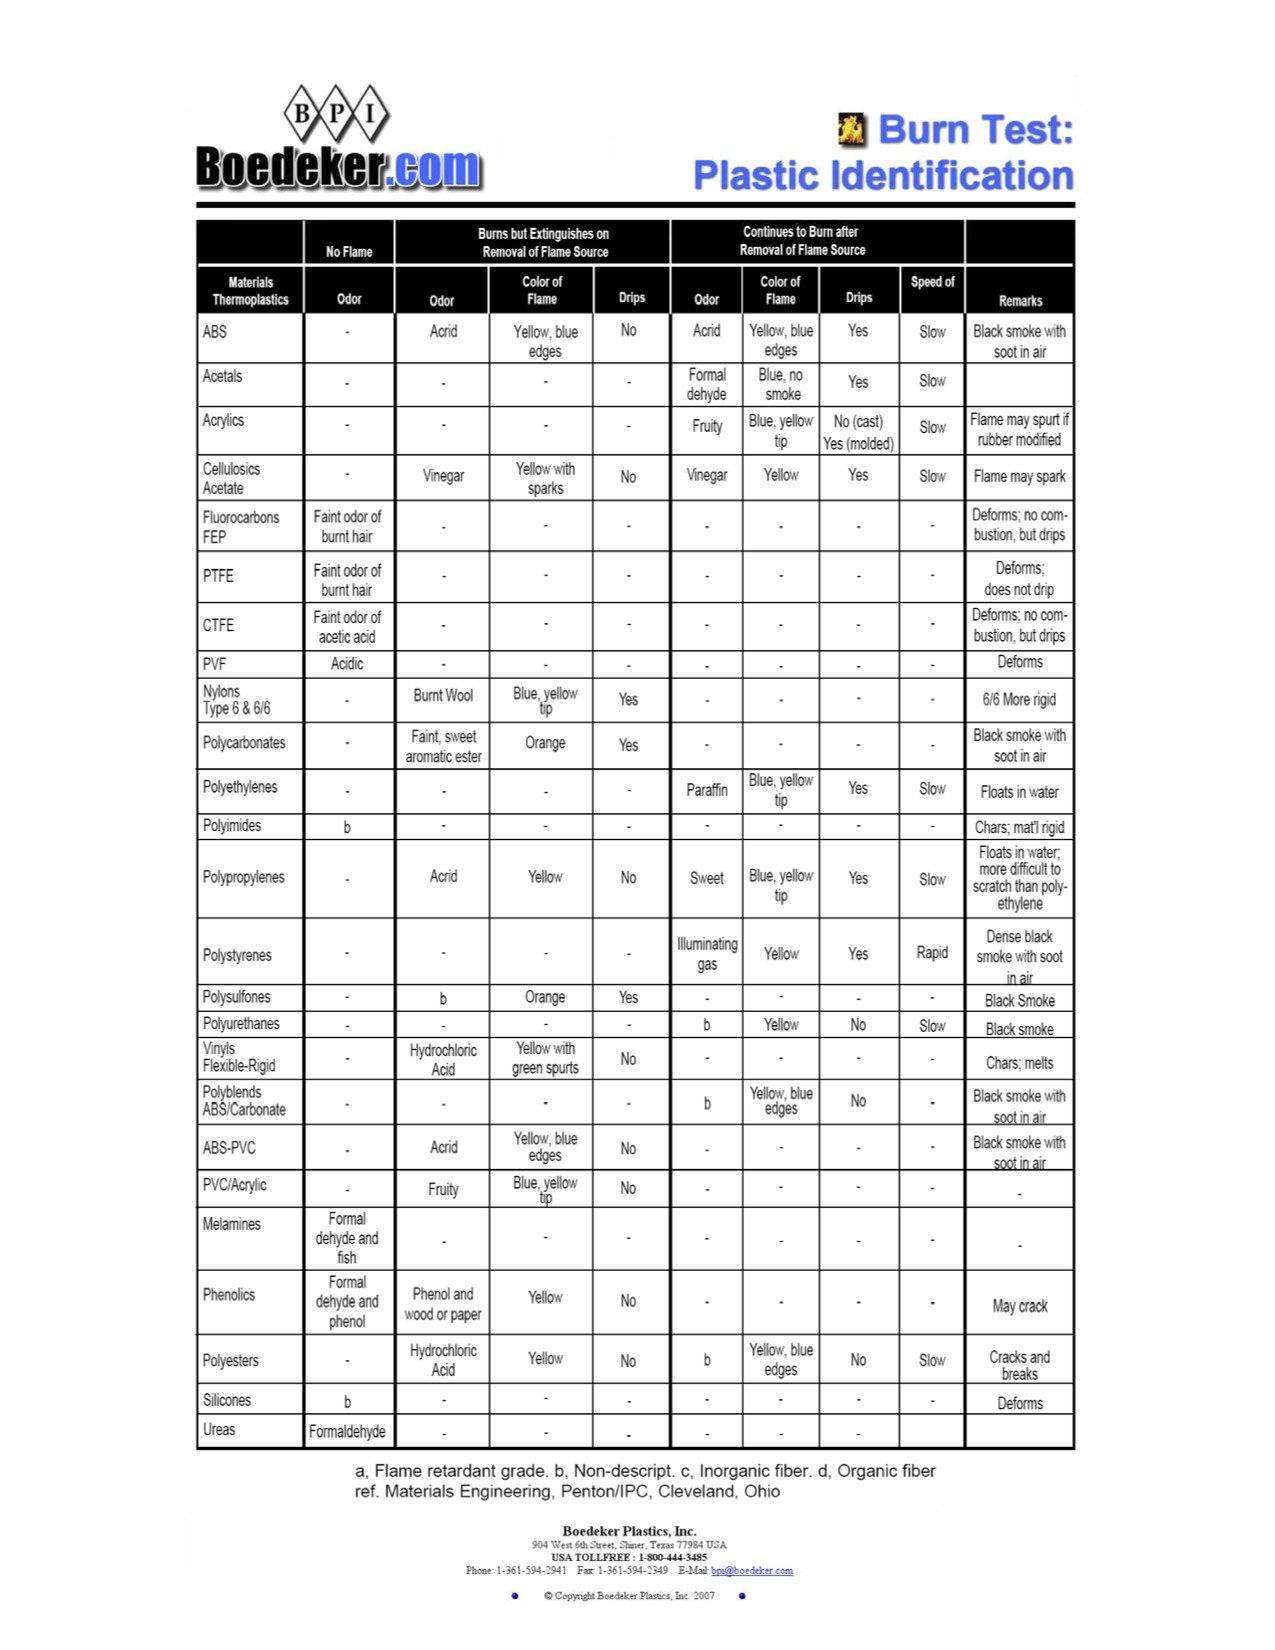 Burn Test Characteristics Table